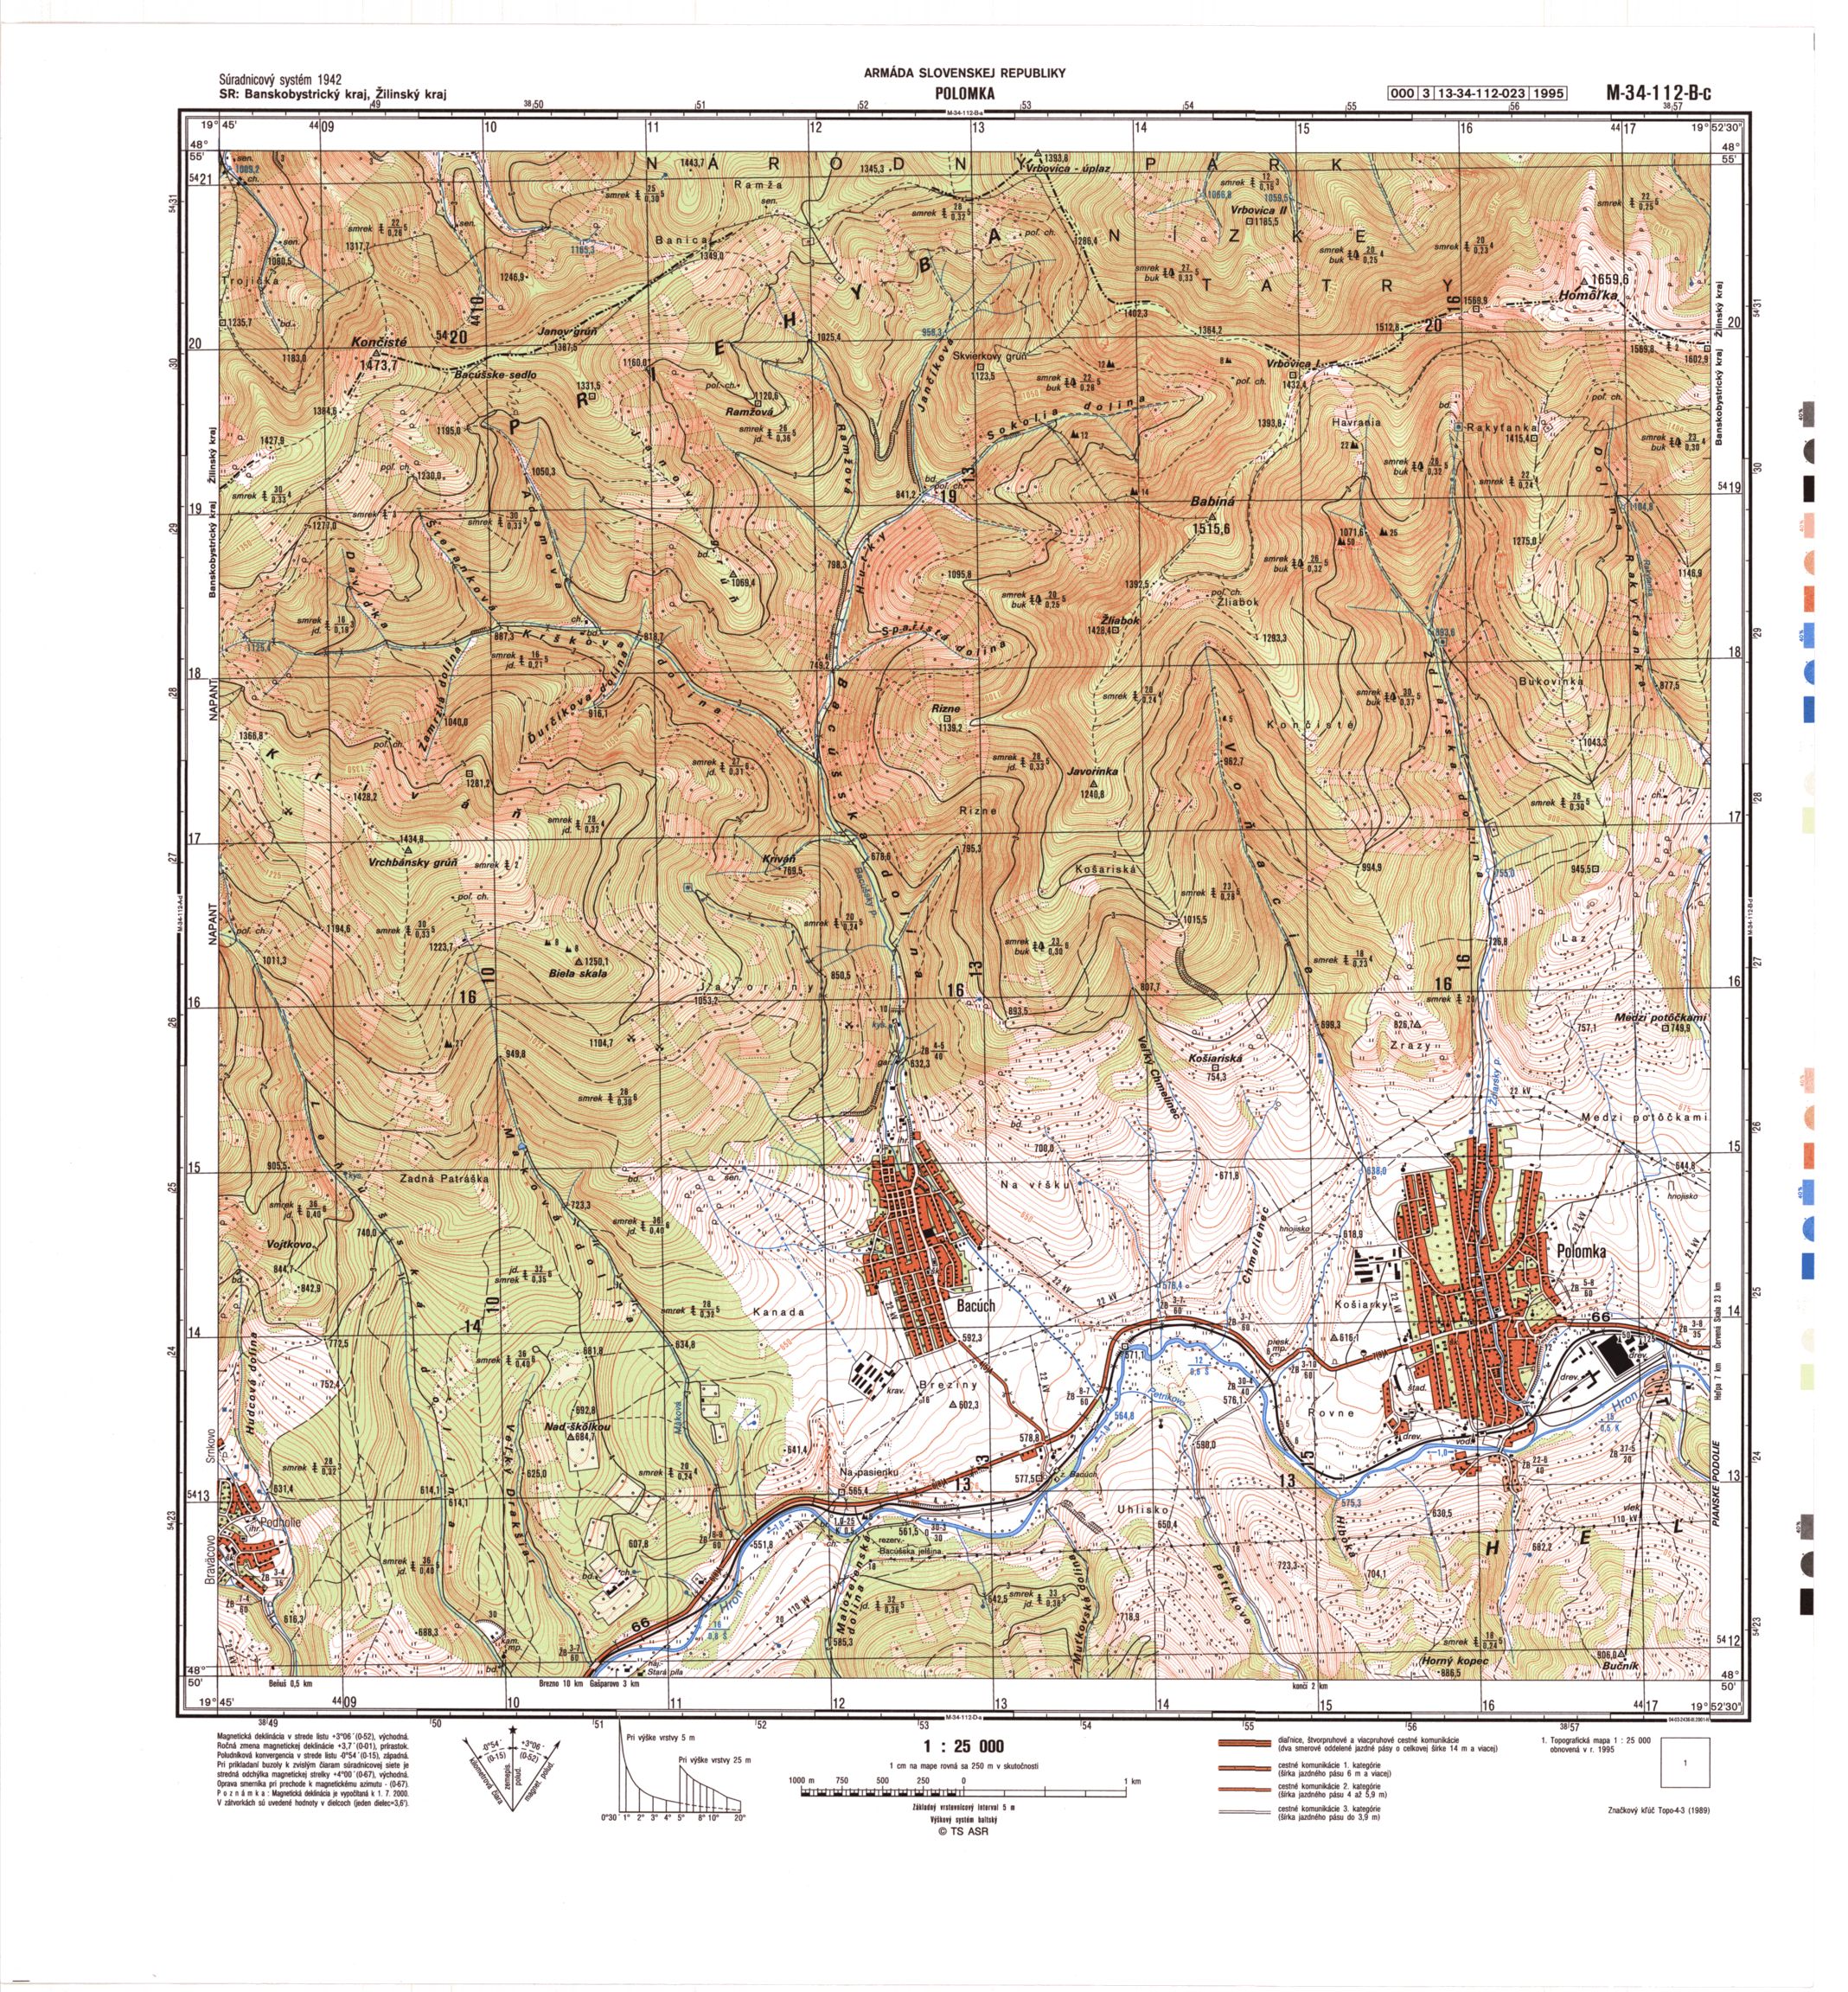 Słowacja 25k Military Maps - m34-112bc.jpg